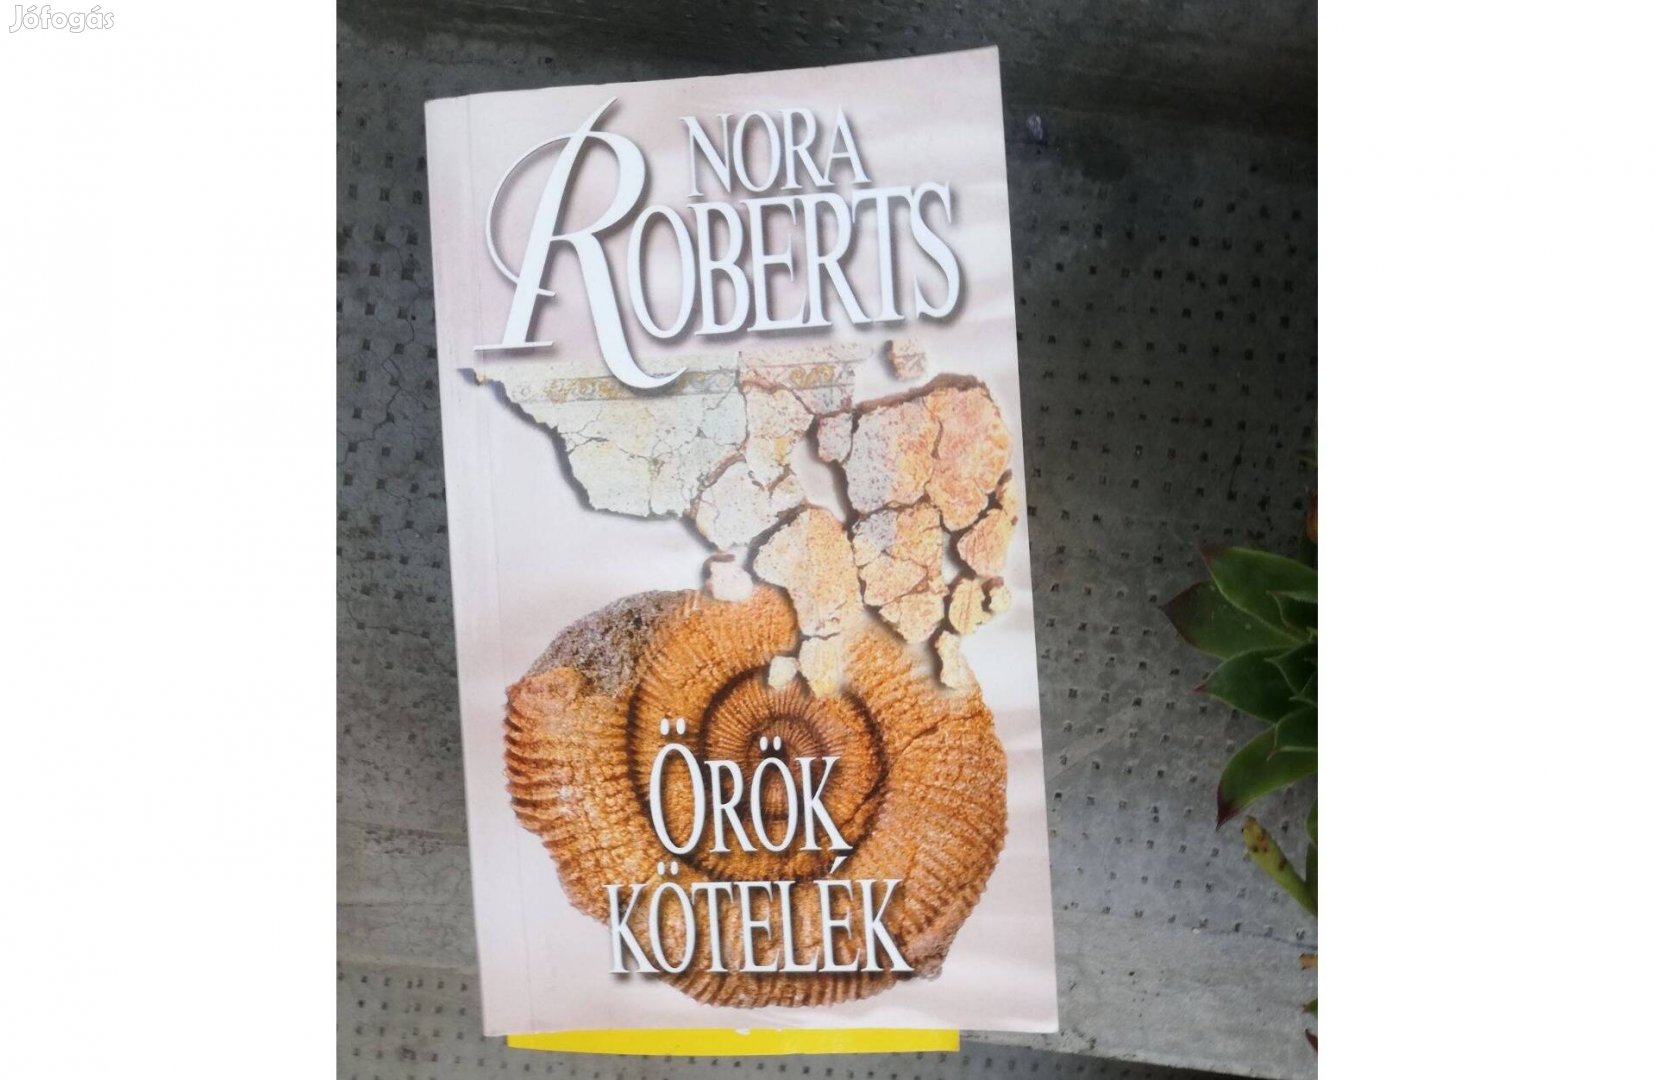 Nora Roberts - Örök kötelék 800 forint